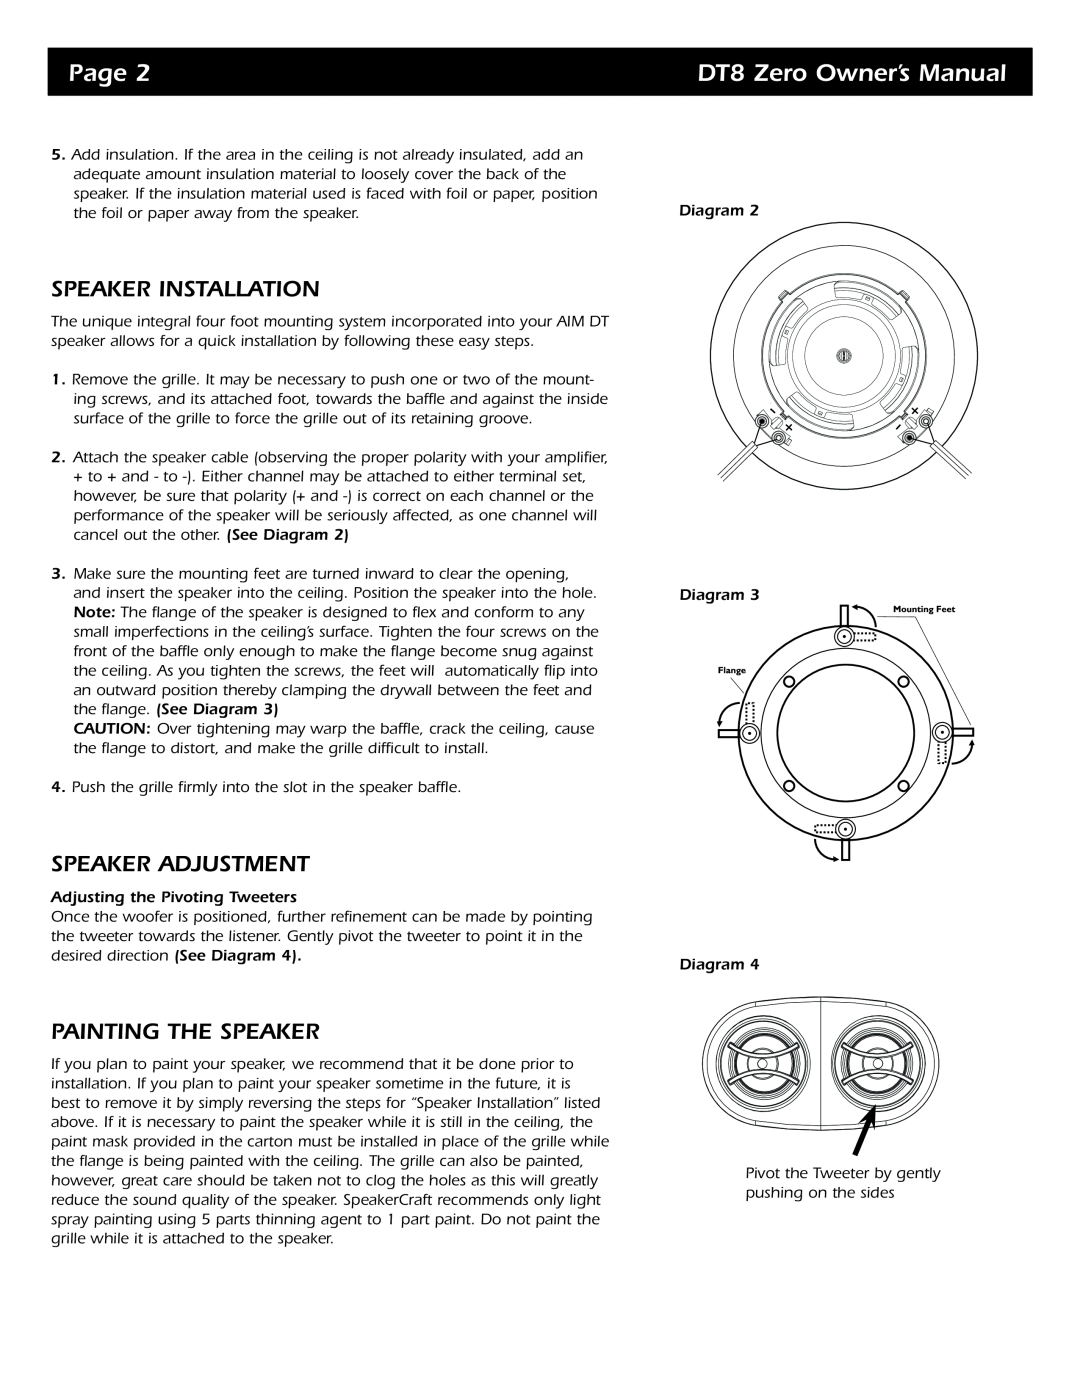 SpeakerCraft DT8 ZERO specifications Speaker Installation, Speaker Adjustment, Painting The Speaker, Page 